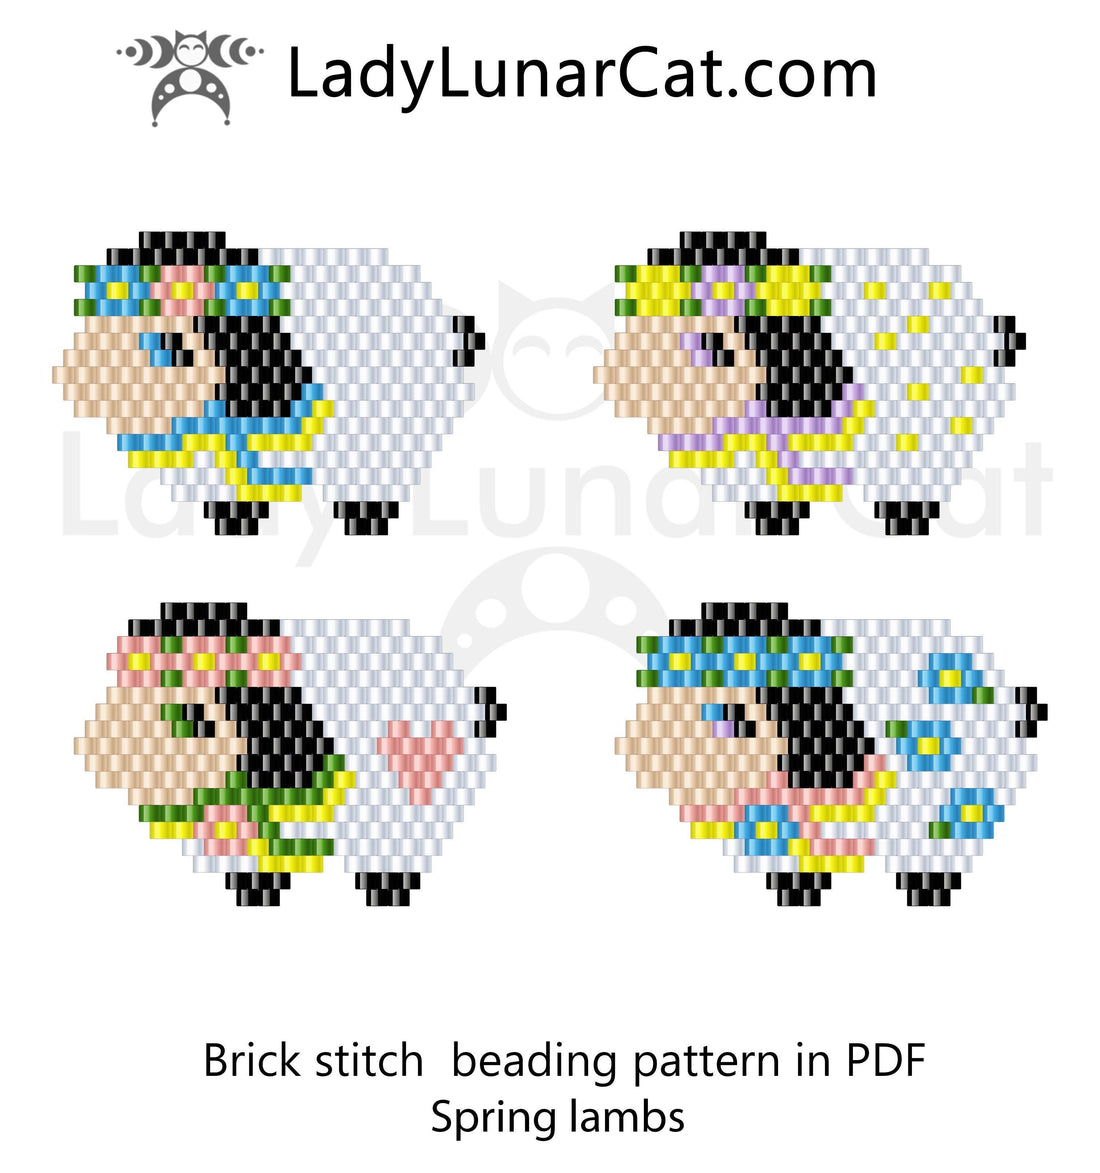 FREE Brick stitch beading pattern - Spring lambs. by Lady Lunar Cat LadyLunarCat